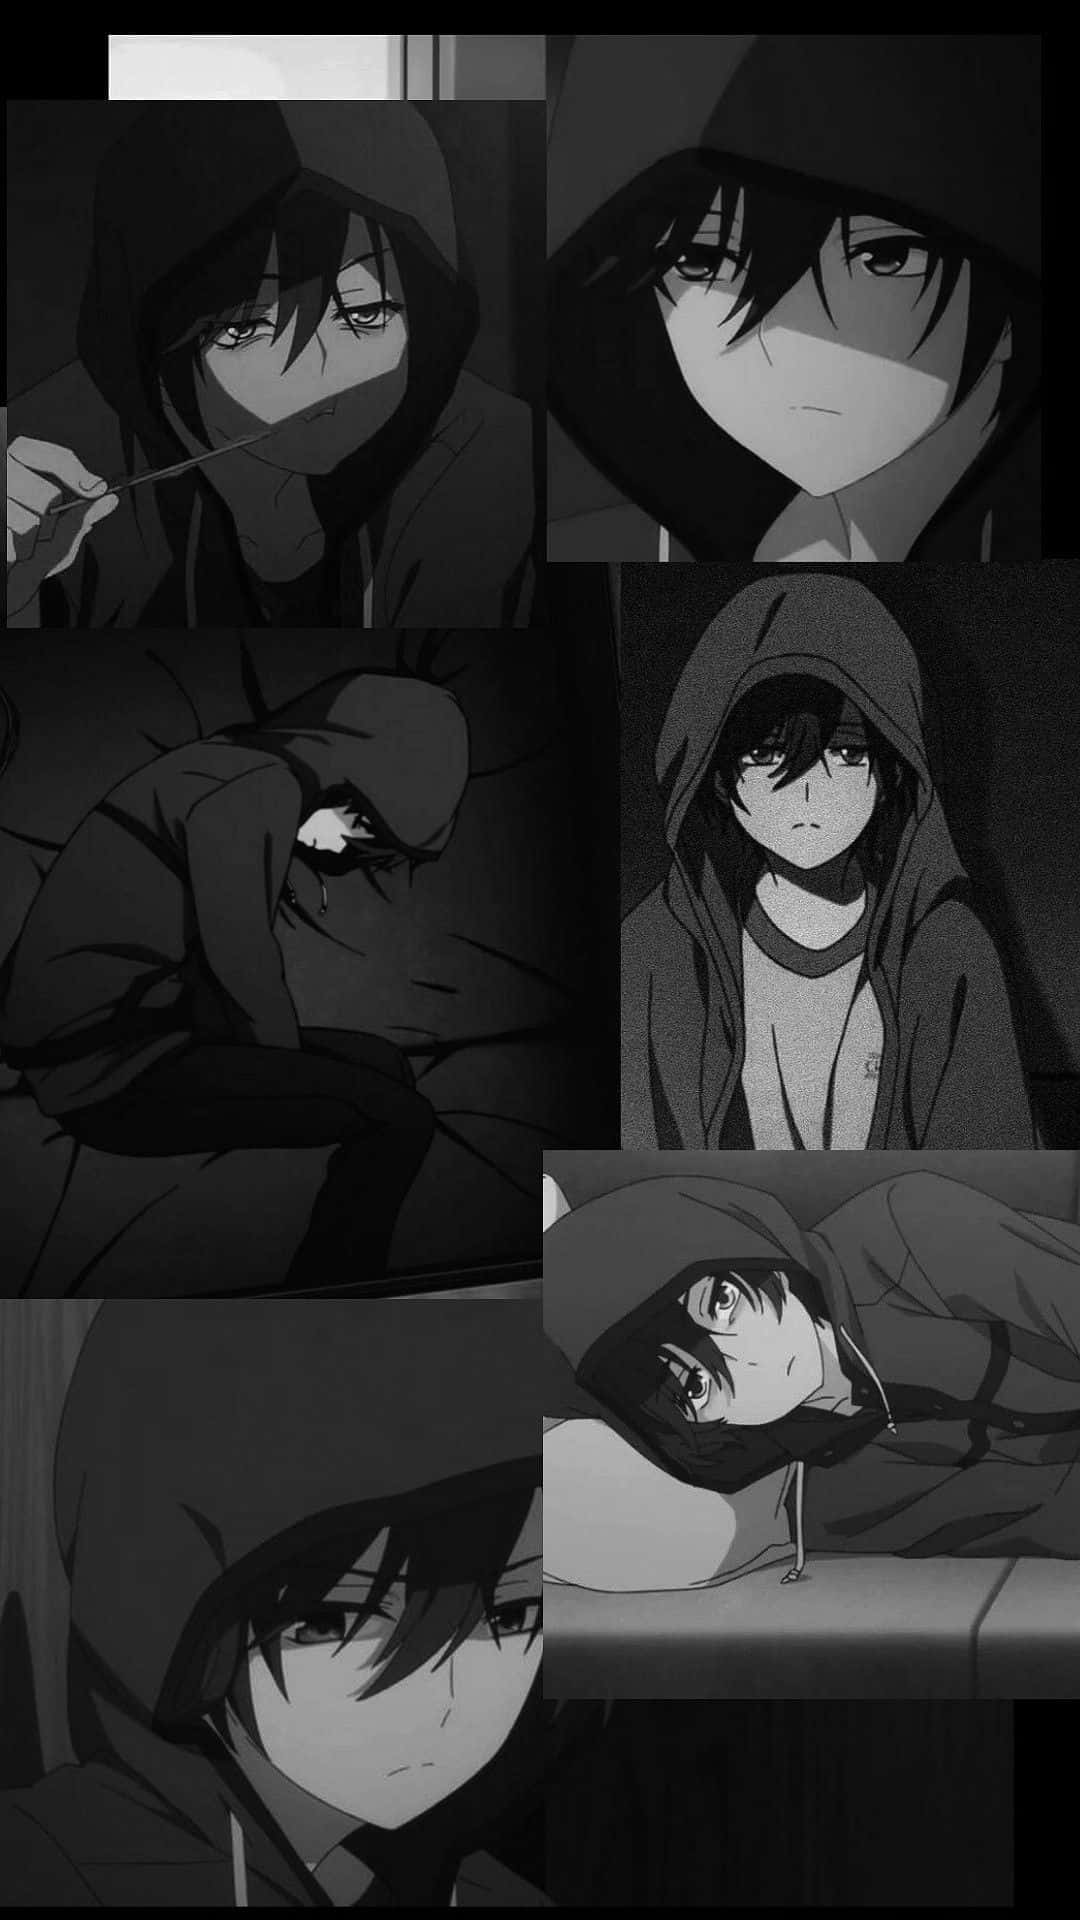 Download Yuu Otosaka Anime Character Anime Depression Wallpaper | Wallpapers .com